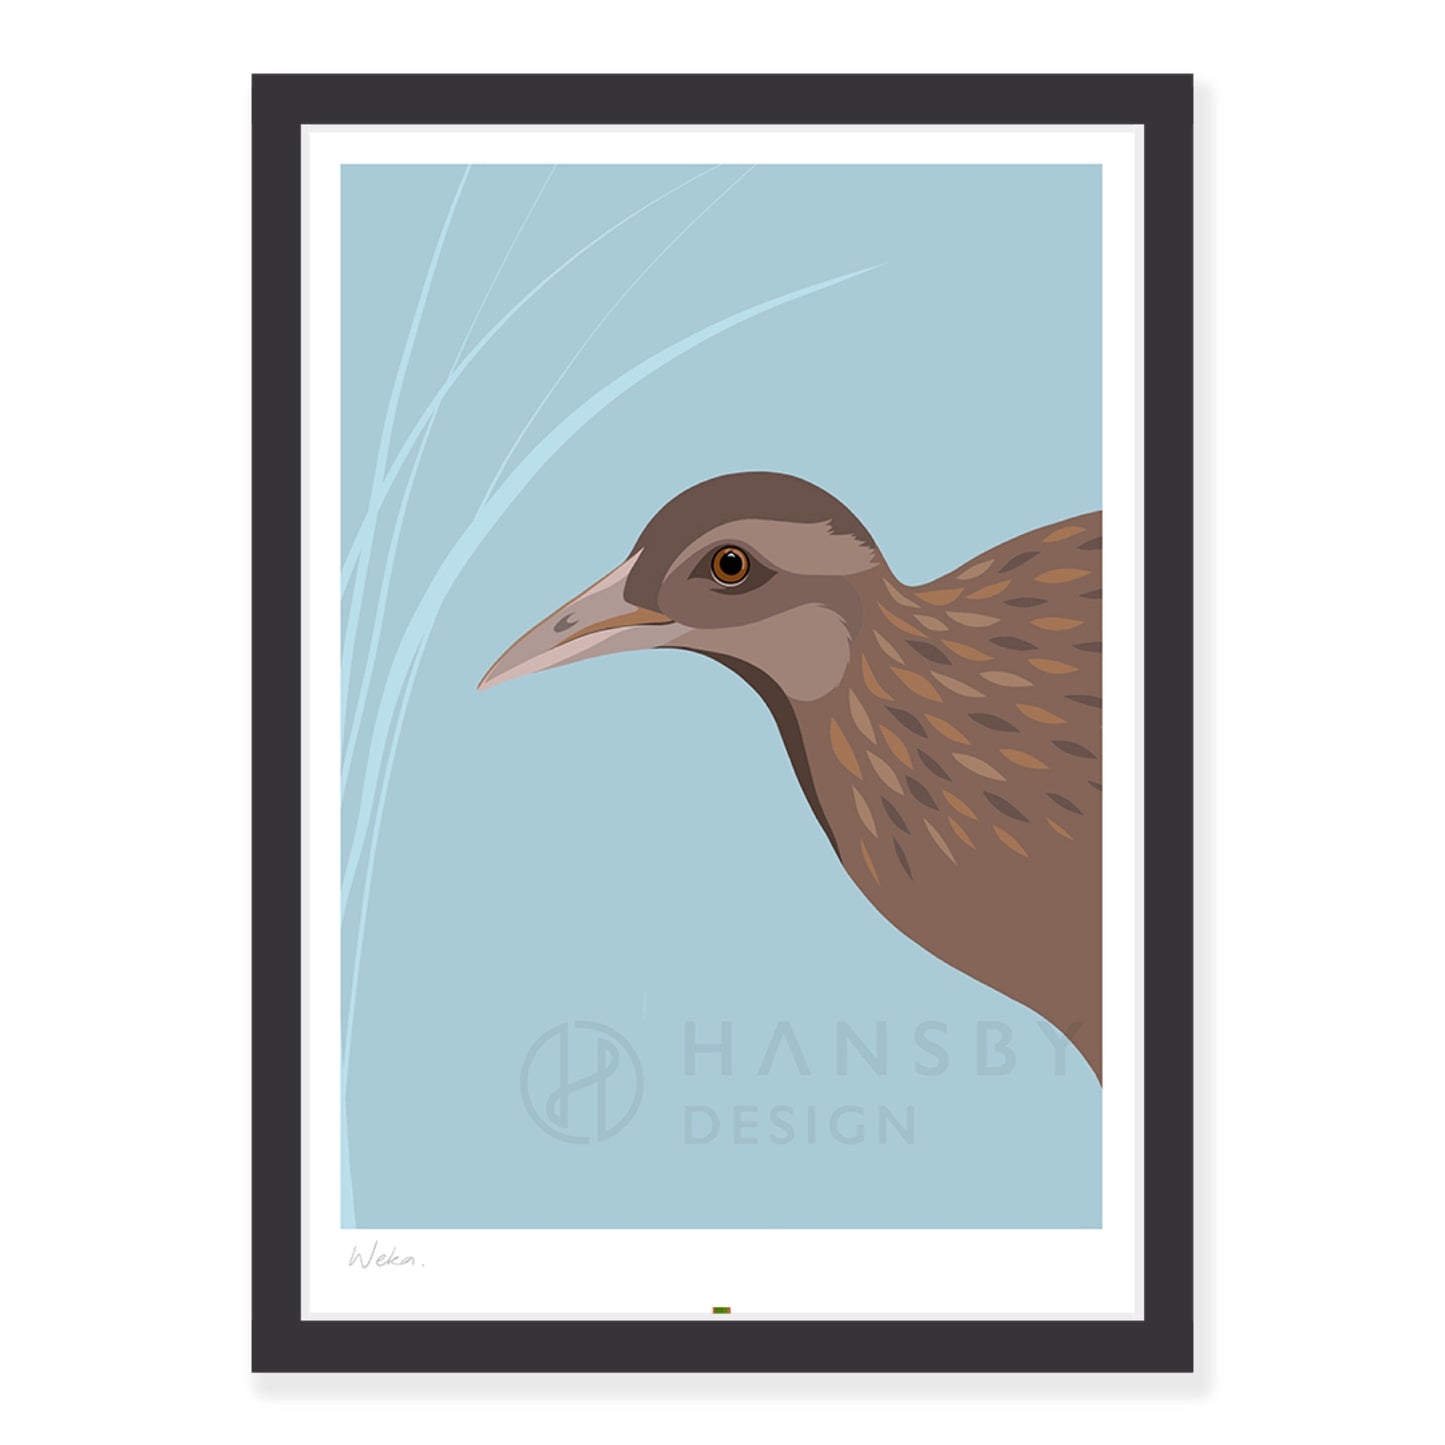 Weka bird art print in black frame, by NZ artist Hansby Design